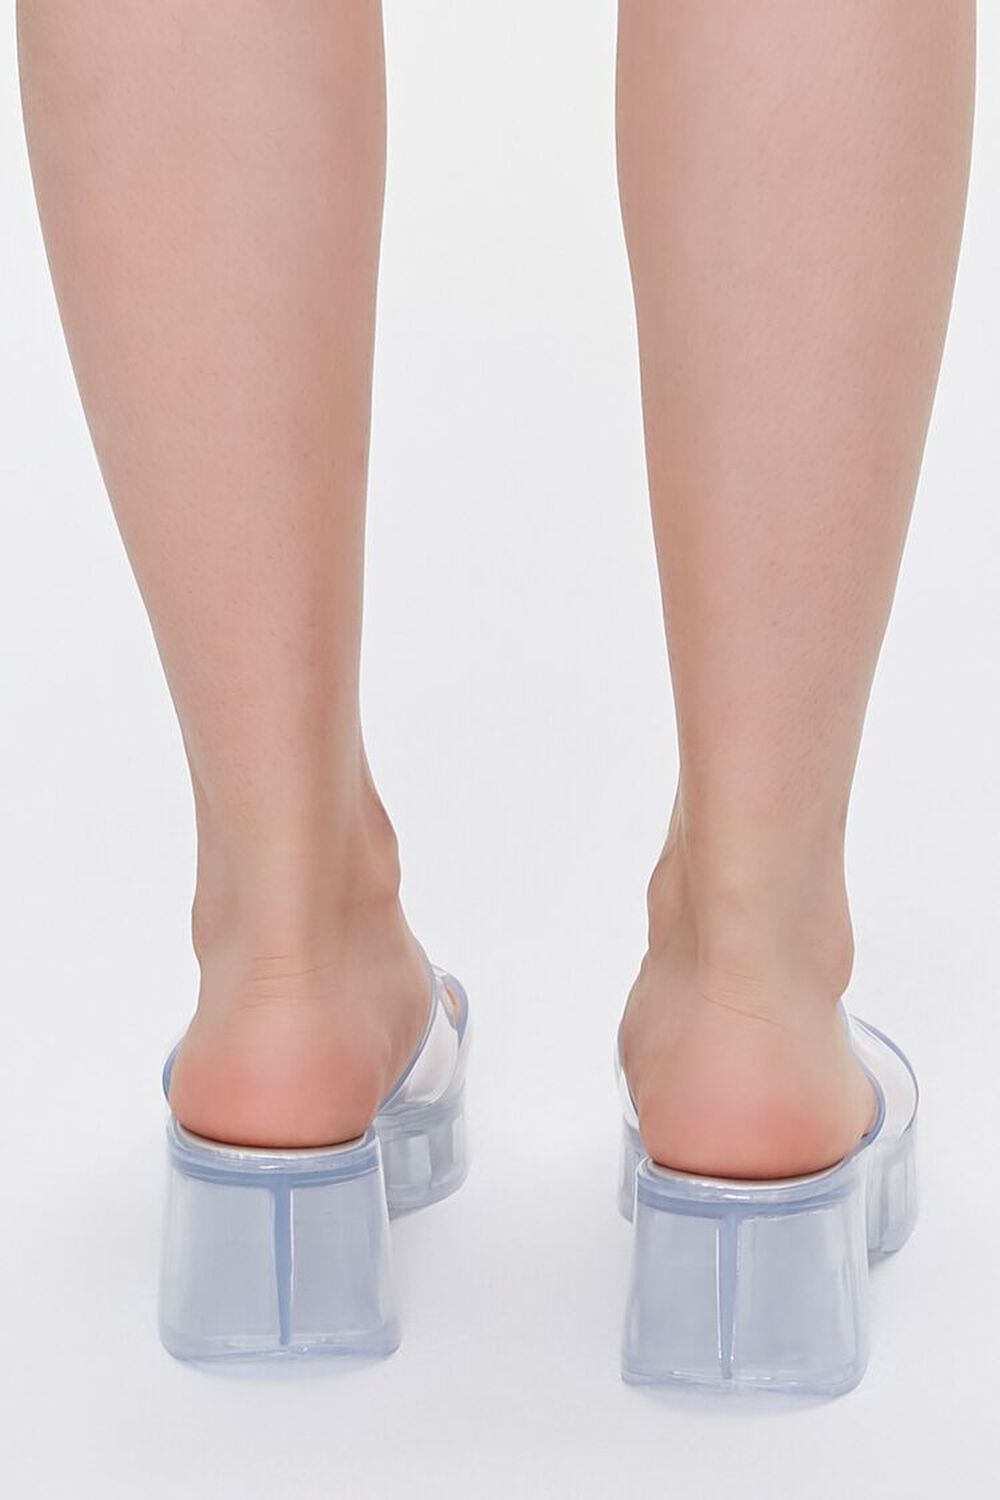 CLEAR Jelly Platform Sandals, image 3